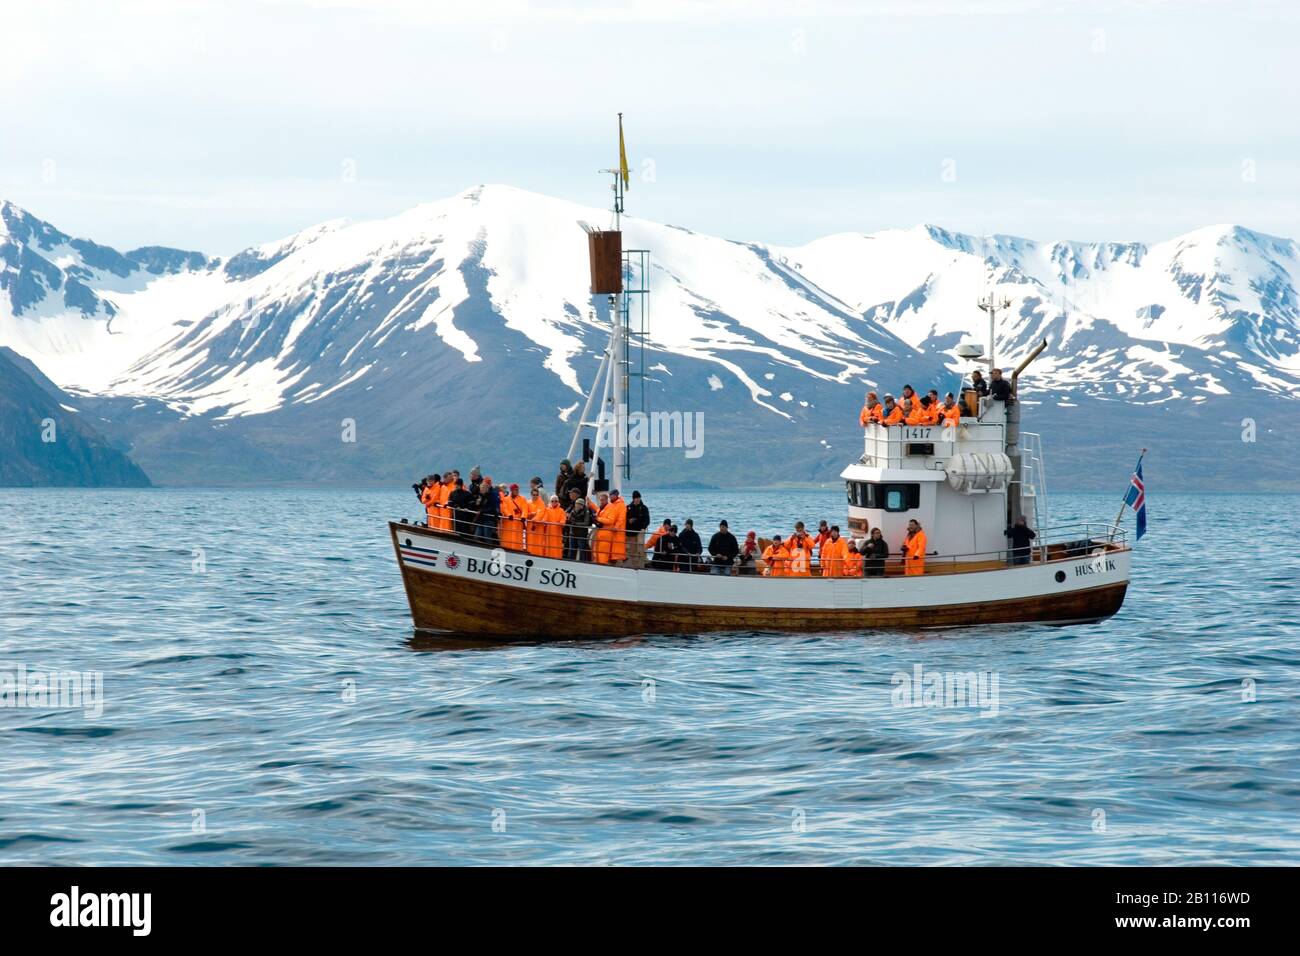 tourists on a whale watching boat, Iceland, Husavik Stock Photo